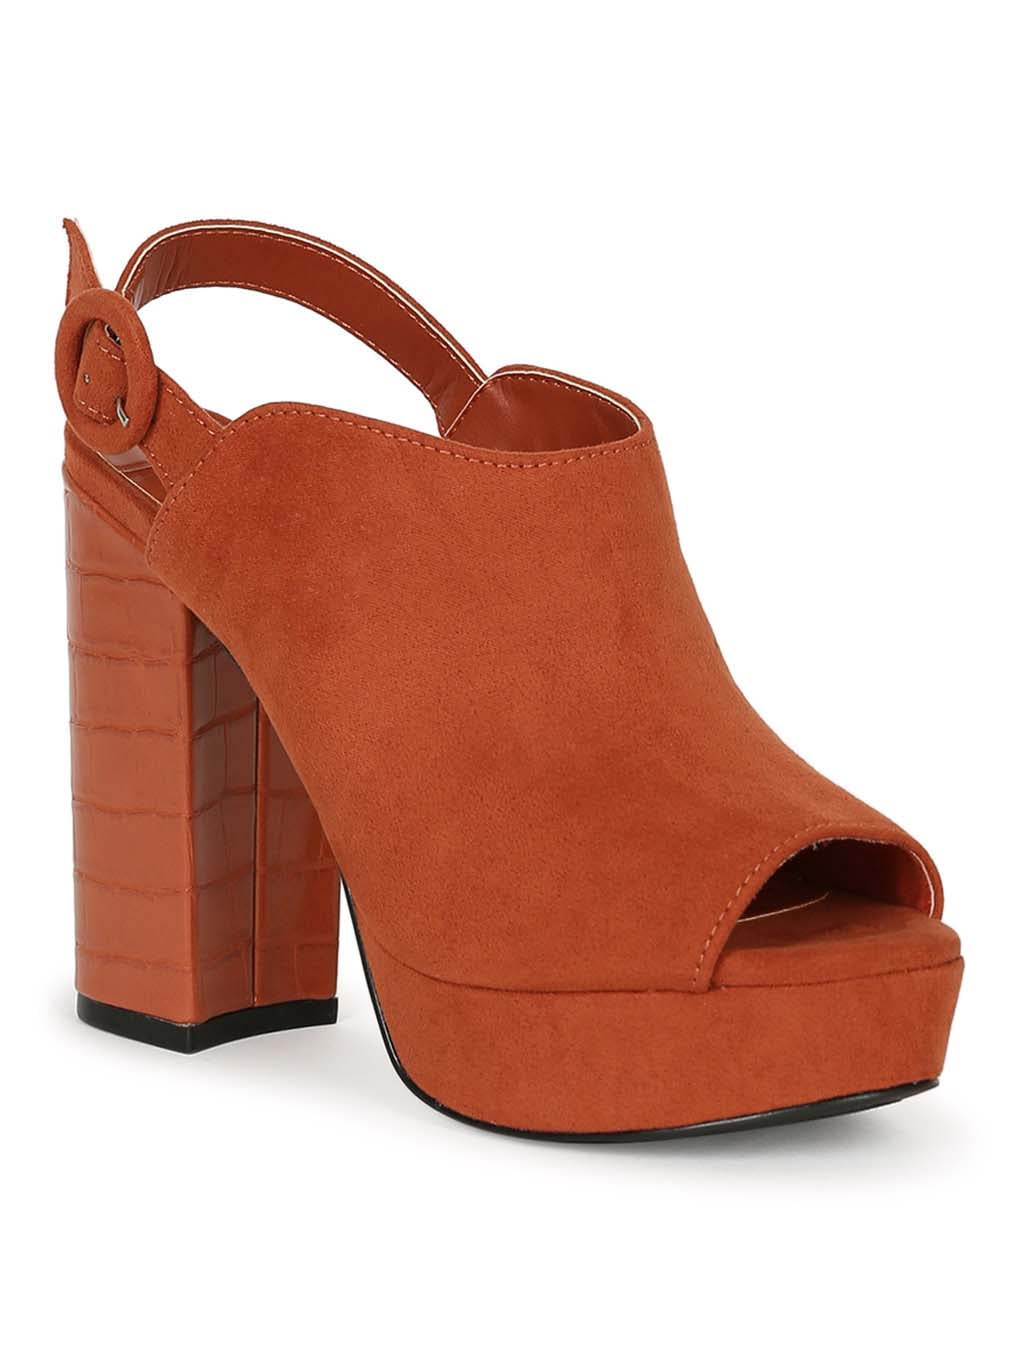 Womens Platform Heeled Sandals Ankle Slingback Strap Faux Wood Chunky Block Heel Peep Toe Clogs Shoes